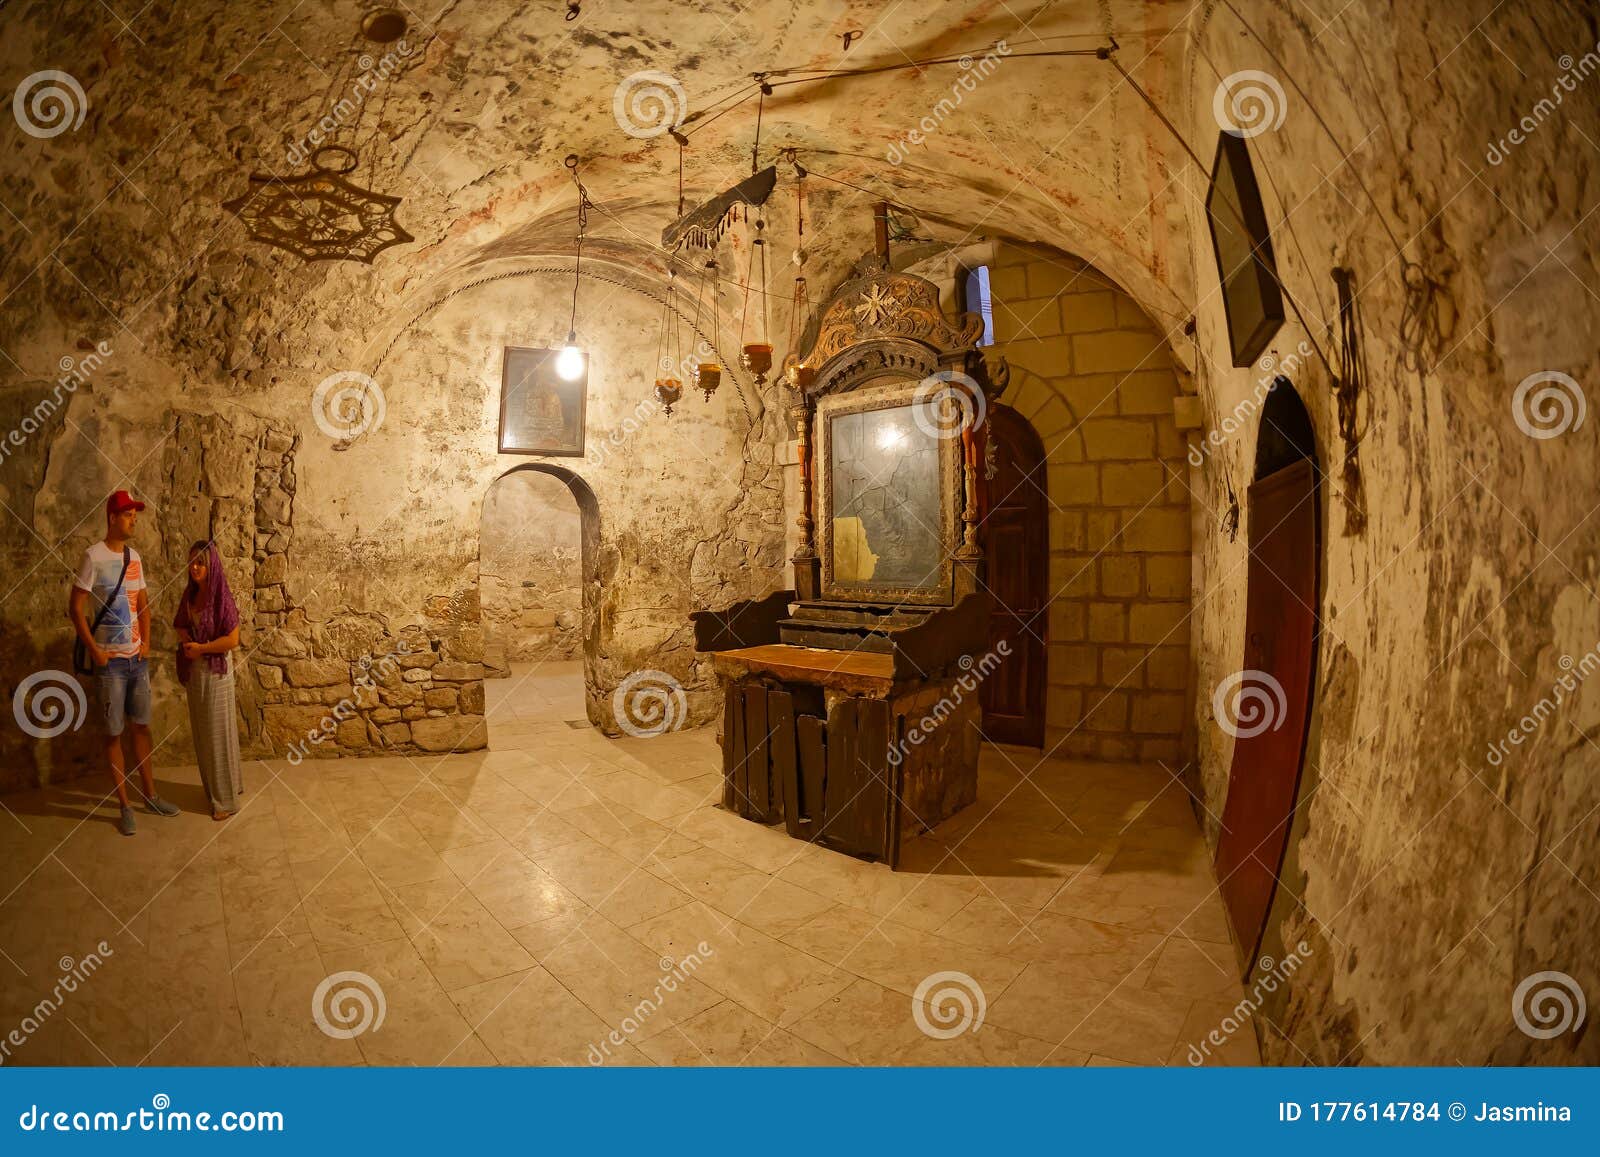 joseph-tomb-in-the-holy-sepulchre-church-in-jerusalem-fisheye-lens